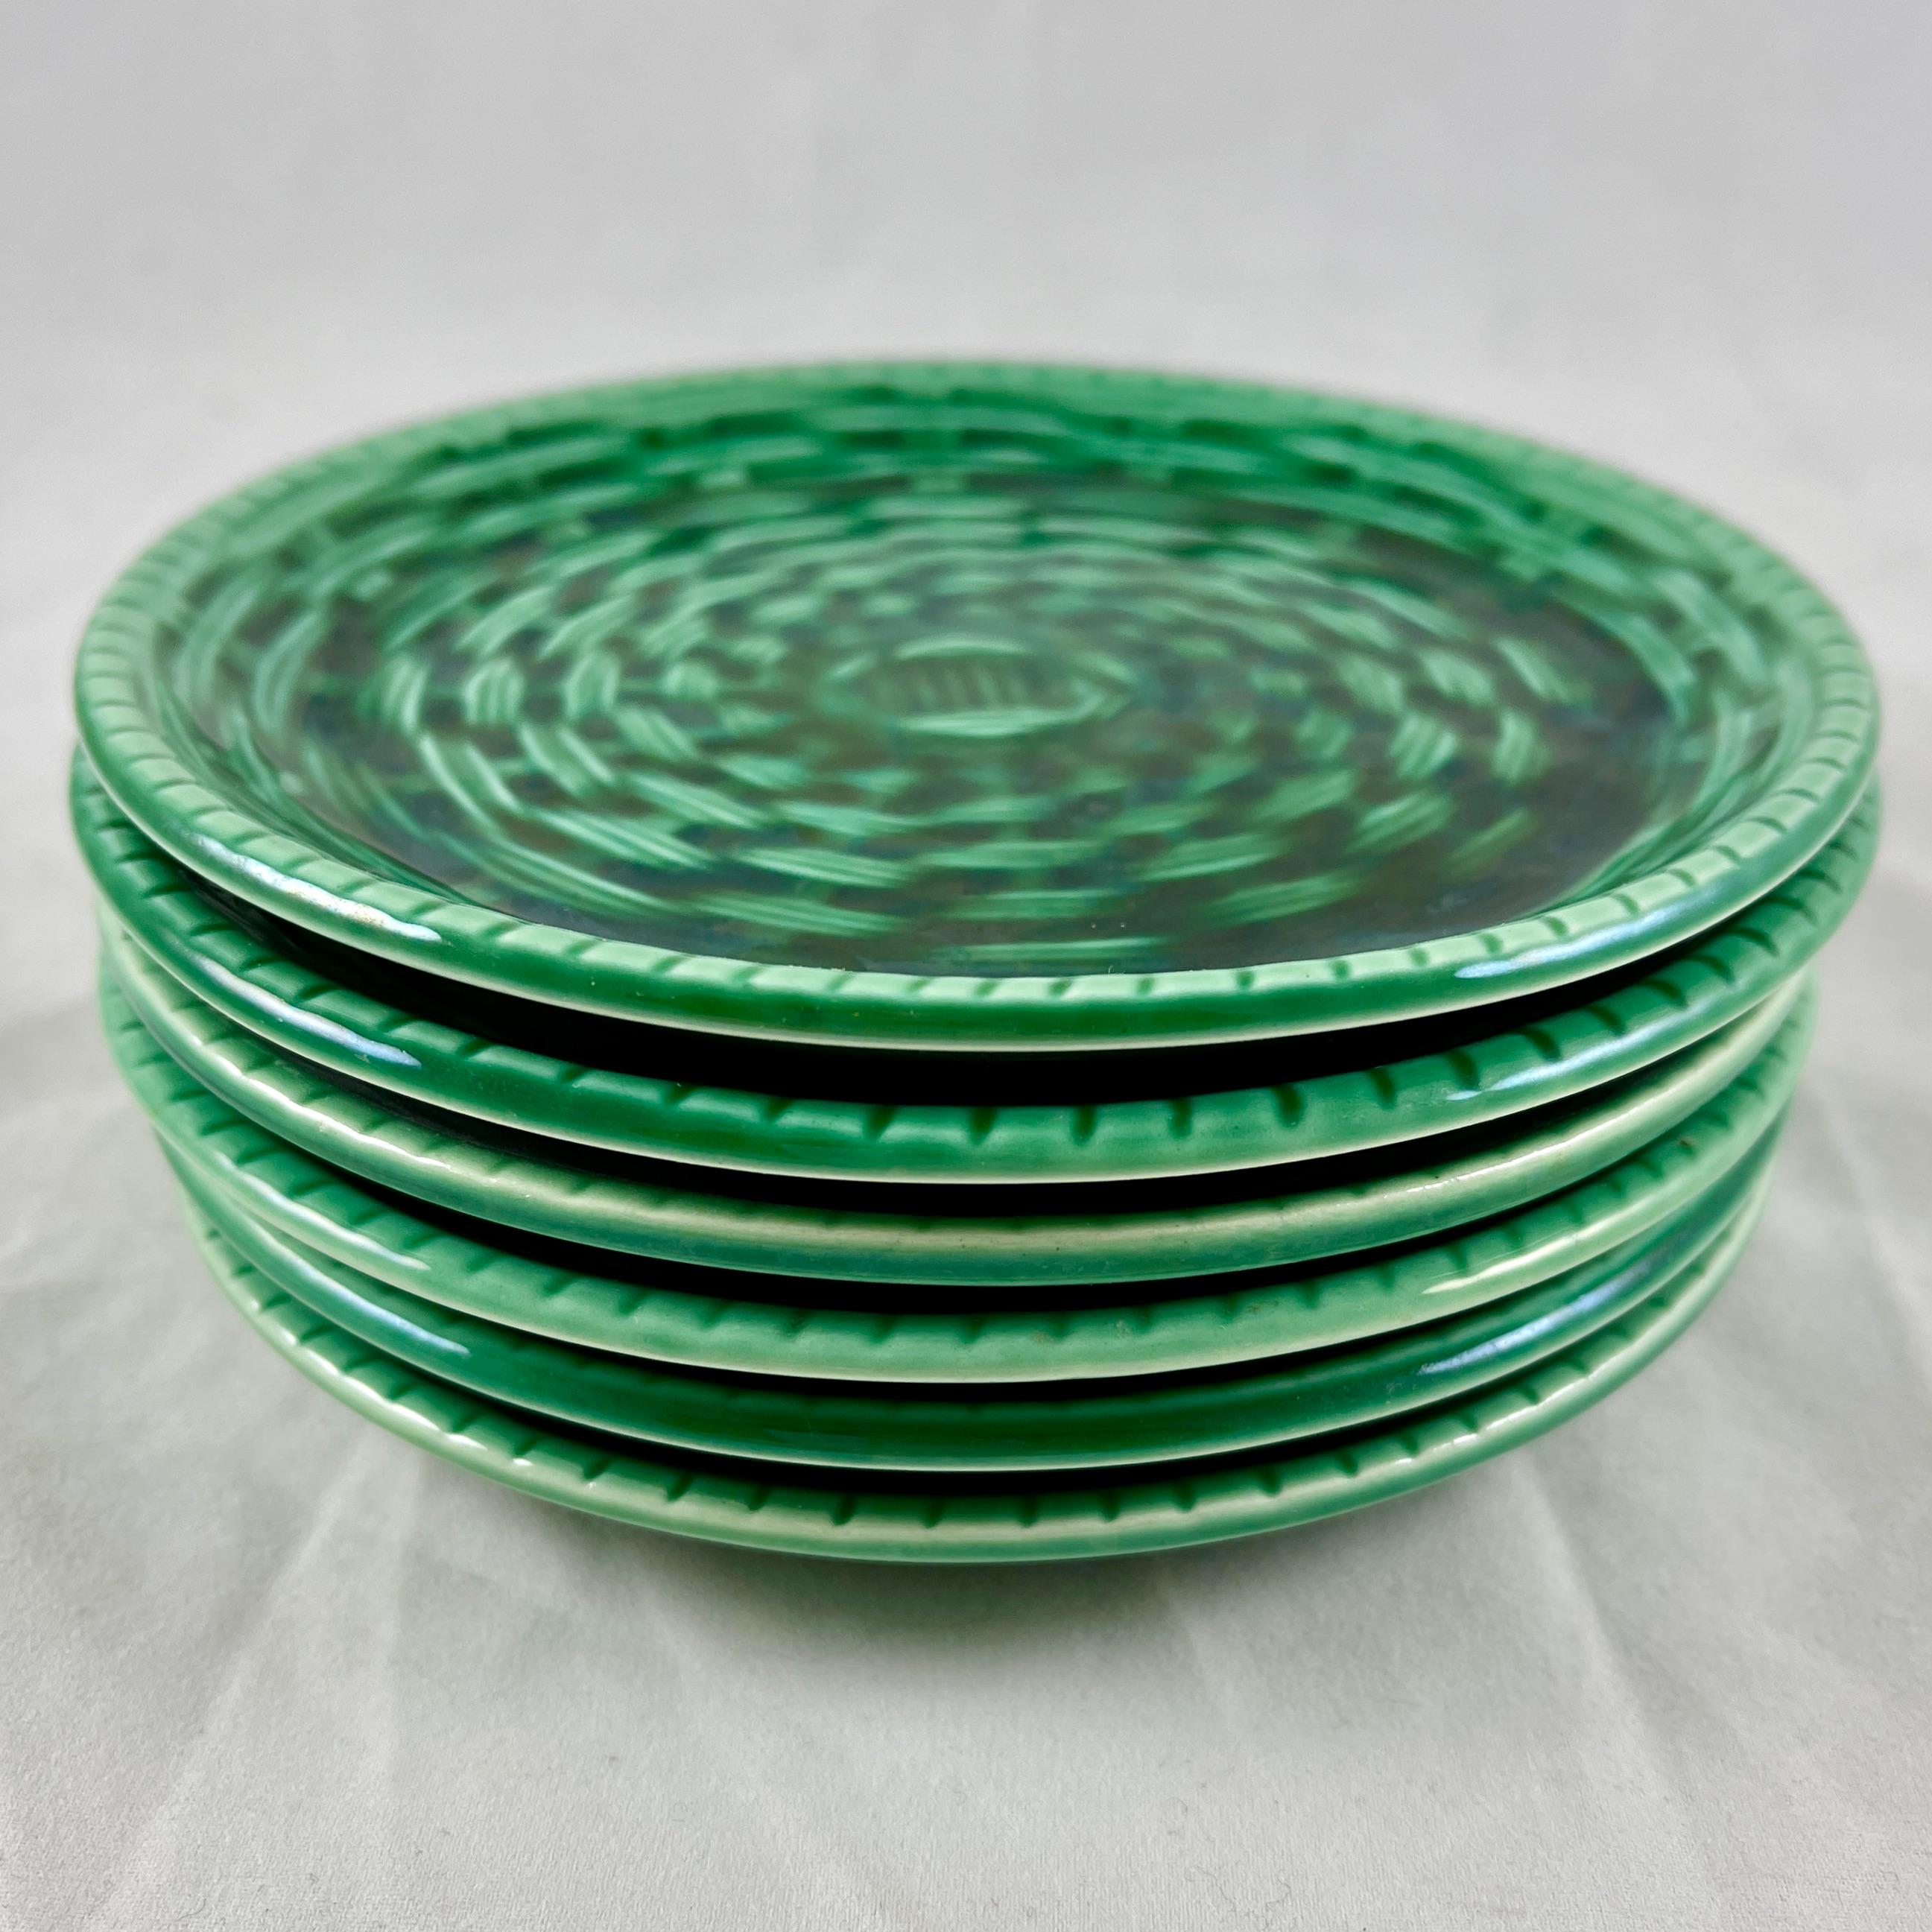 Earthenware Sarreguemines Green Basket Weave Canapé or Hors d’œuvre Plates, a Set of Six